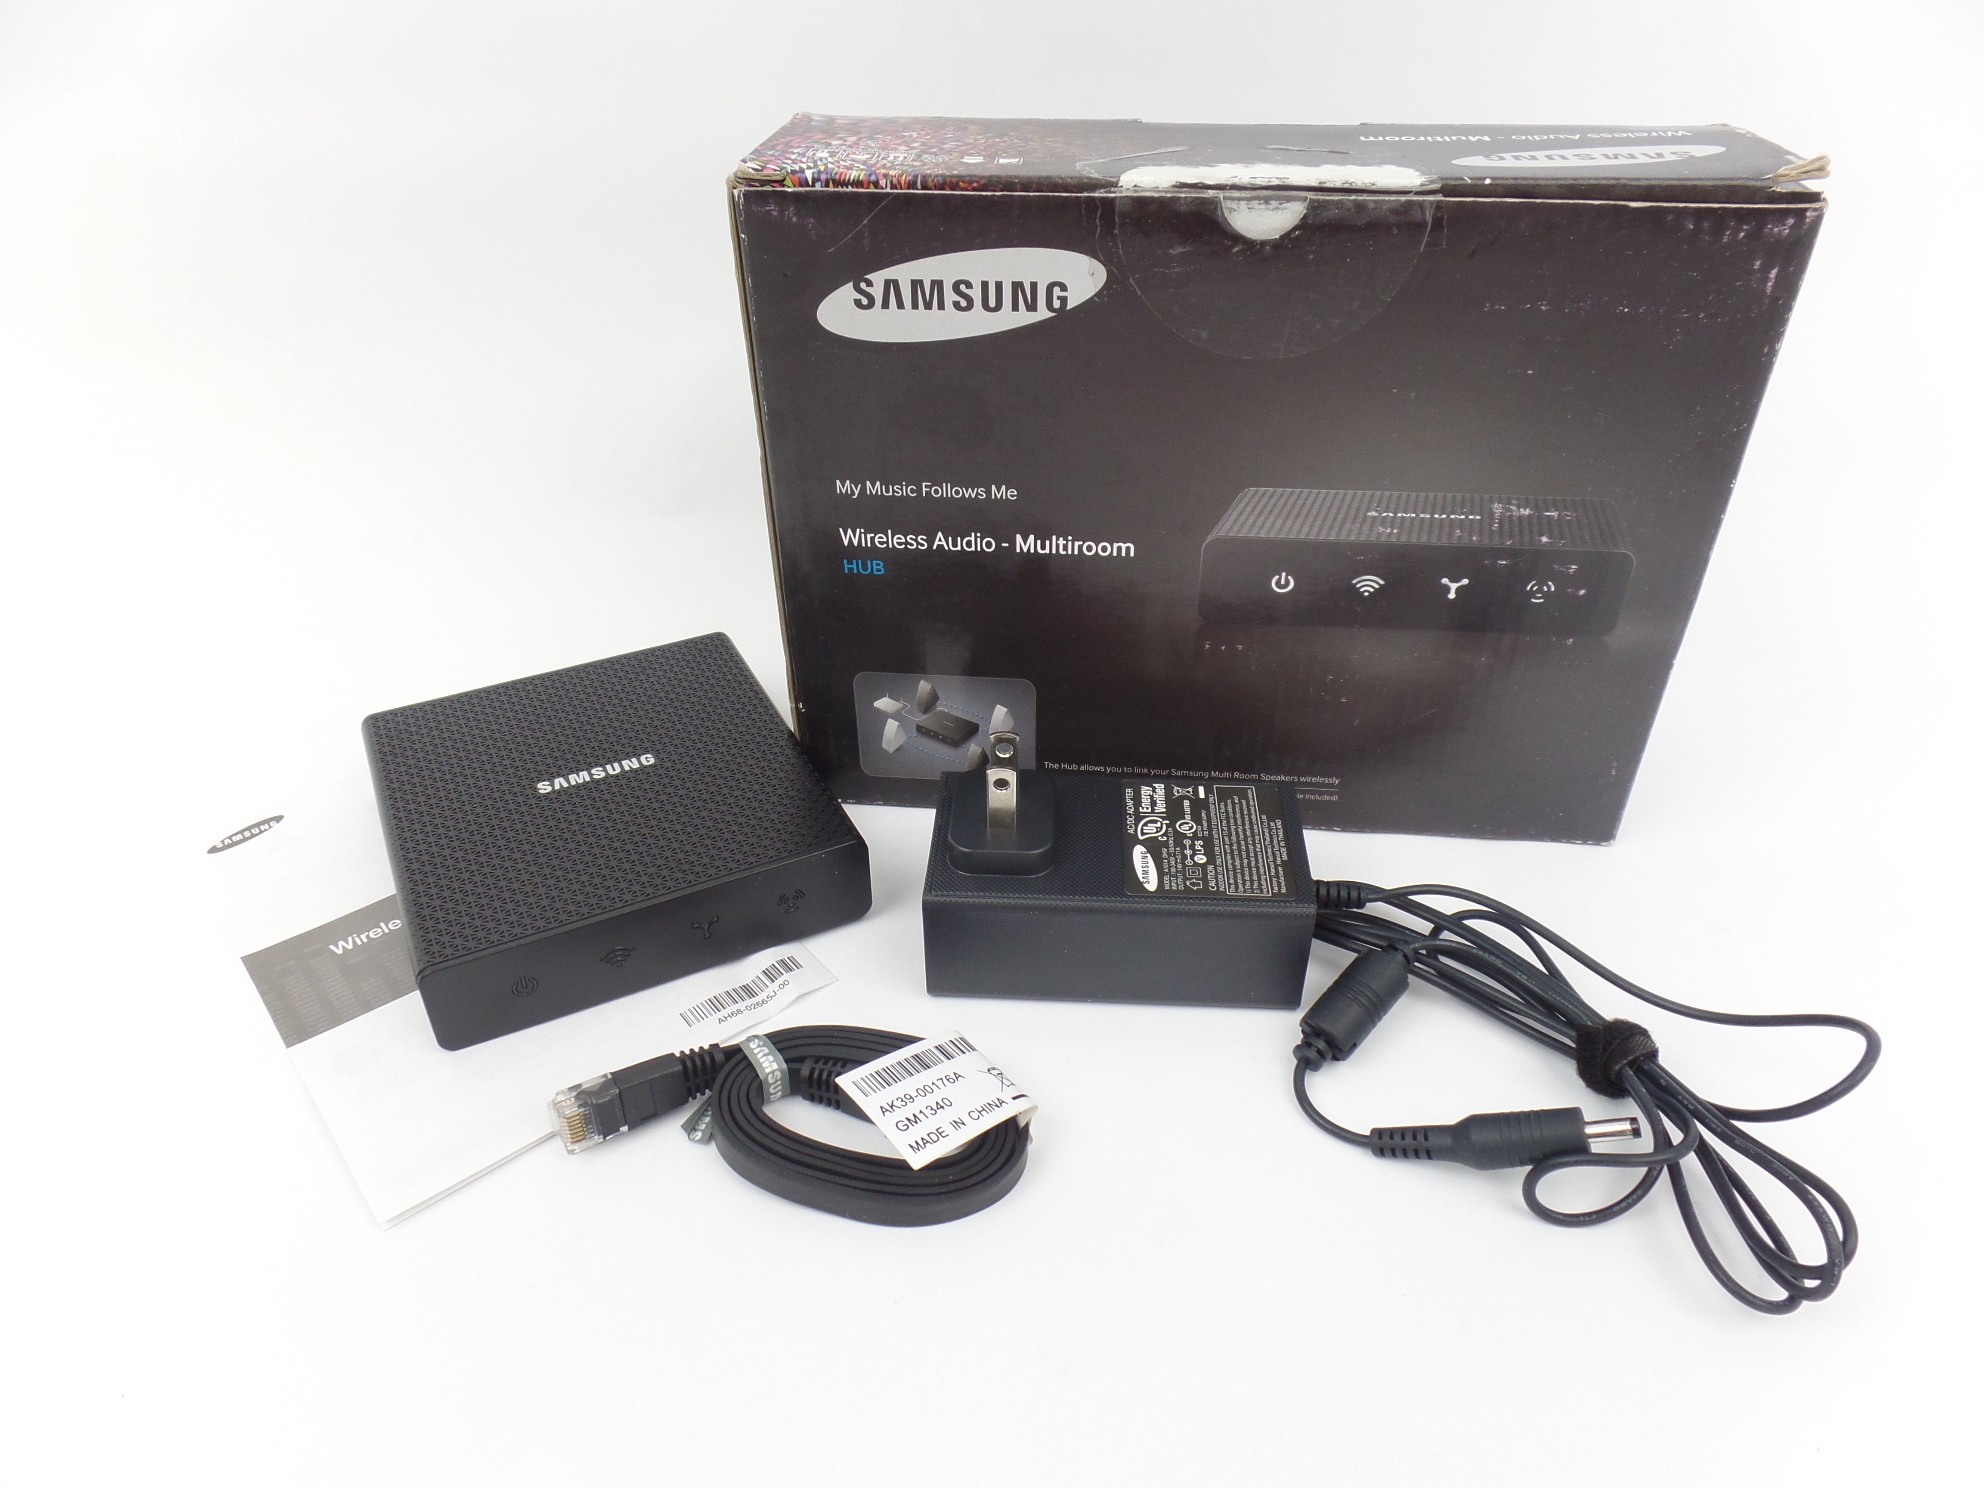 Samsung WAM250 Wireless Audio Multiroom Hub OB